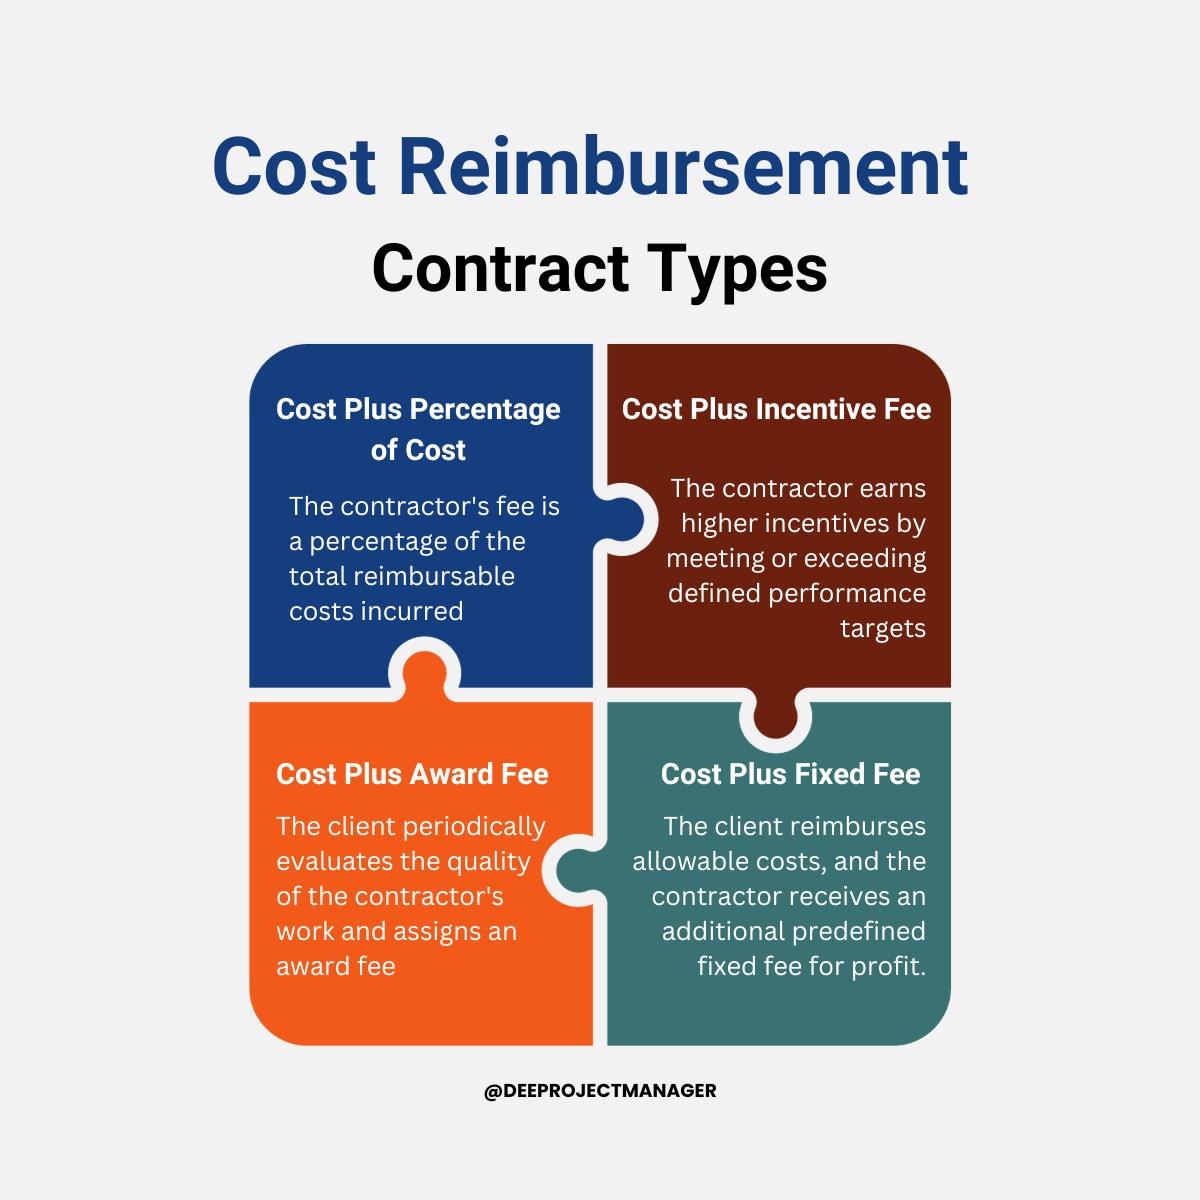 Cost Reimbursement Contract Types